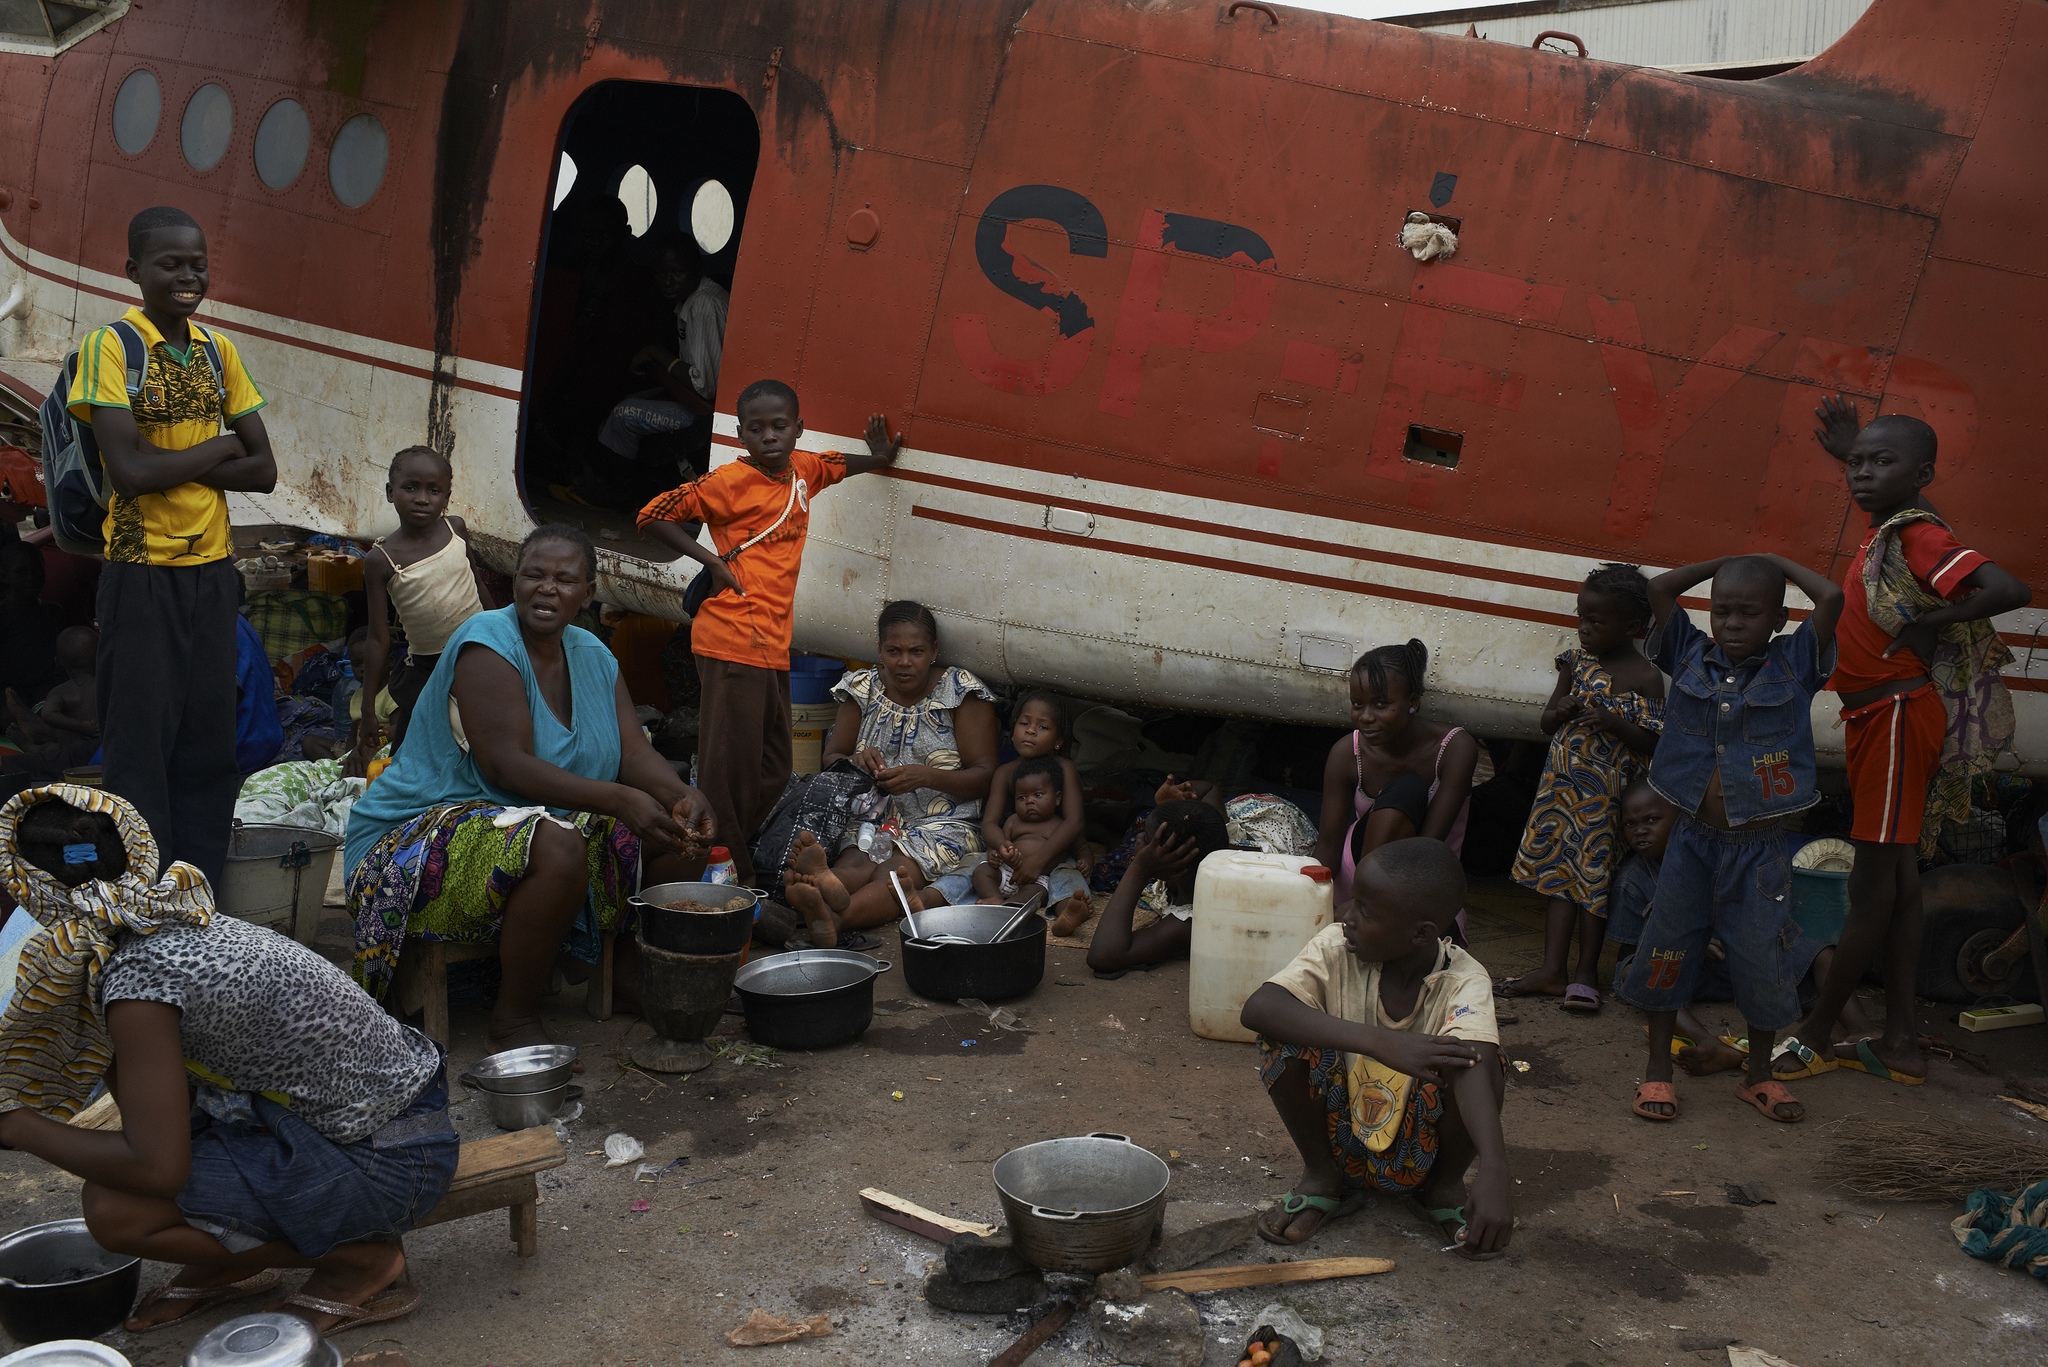 Internally displaced people at Bangui airport